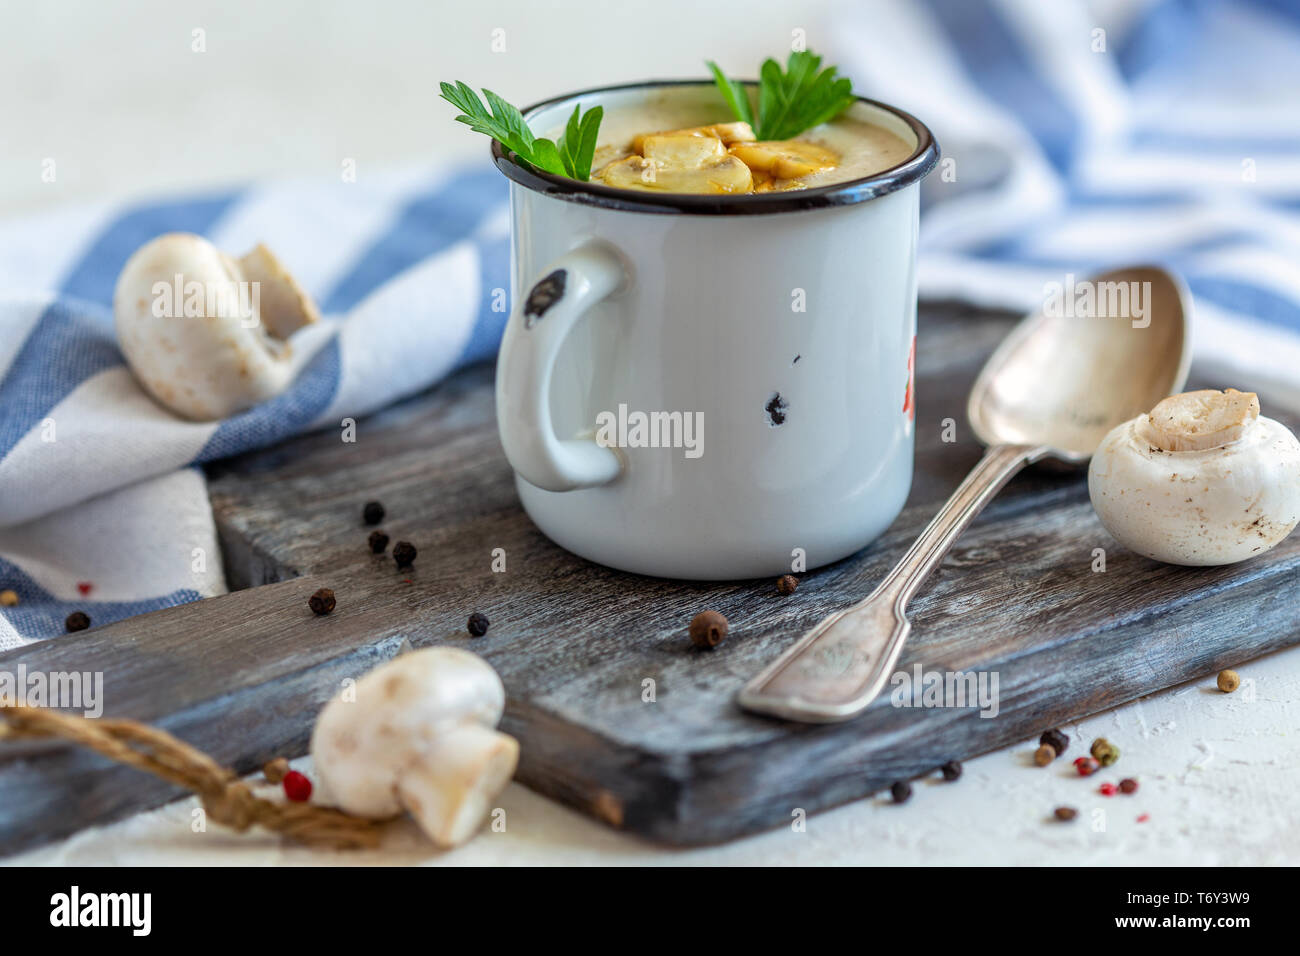 Homemade mushroom cream soup in an enamel mug. Stock Photo